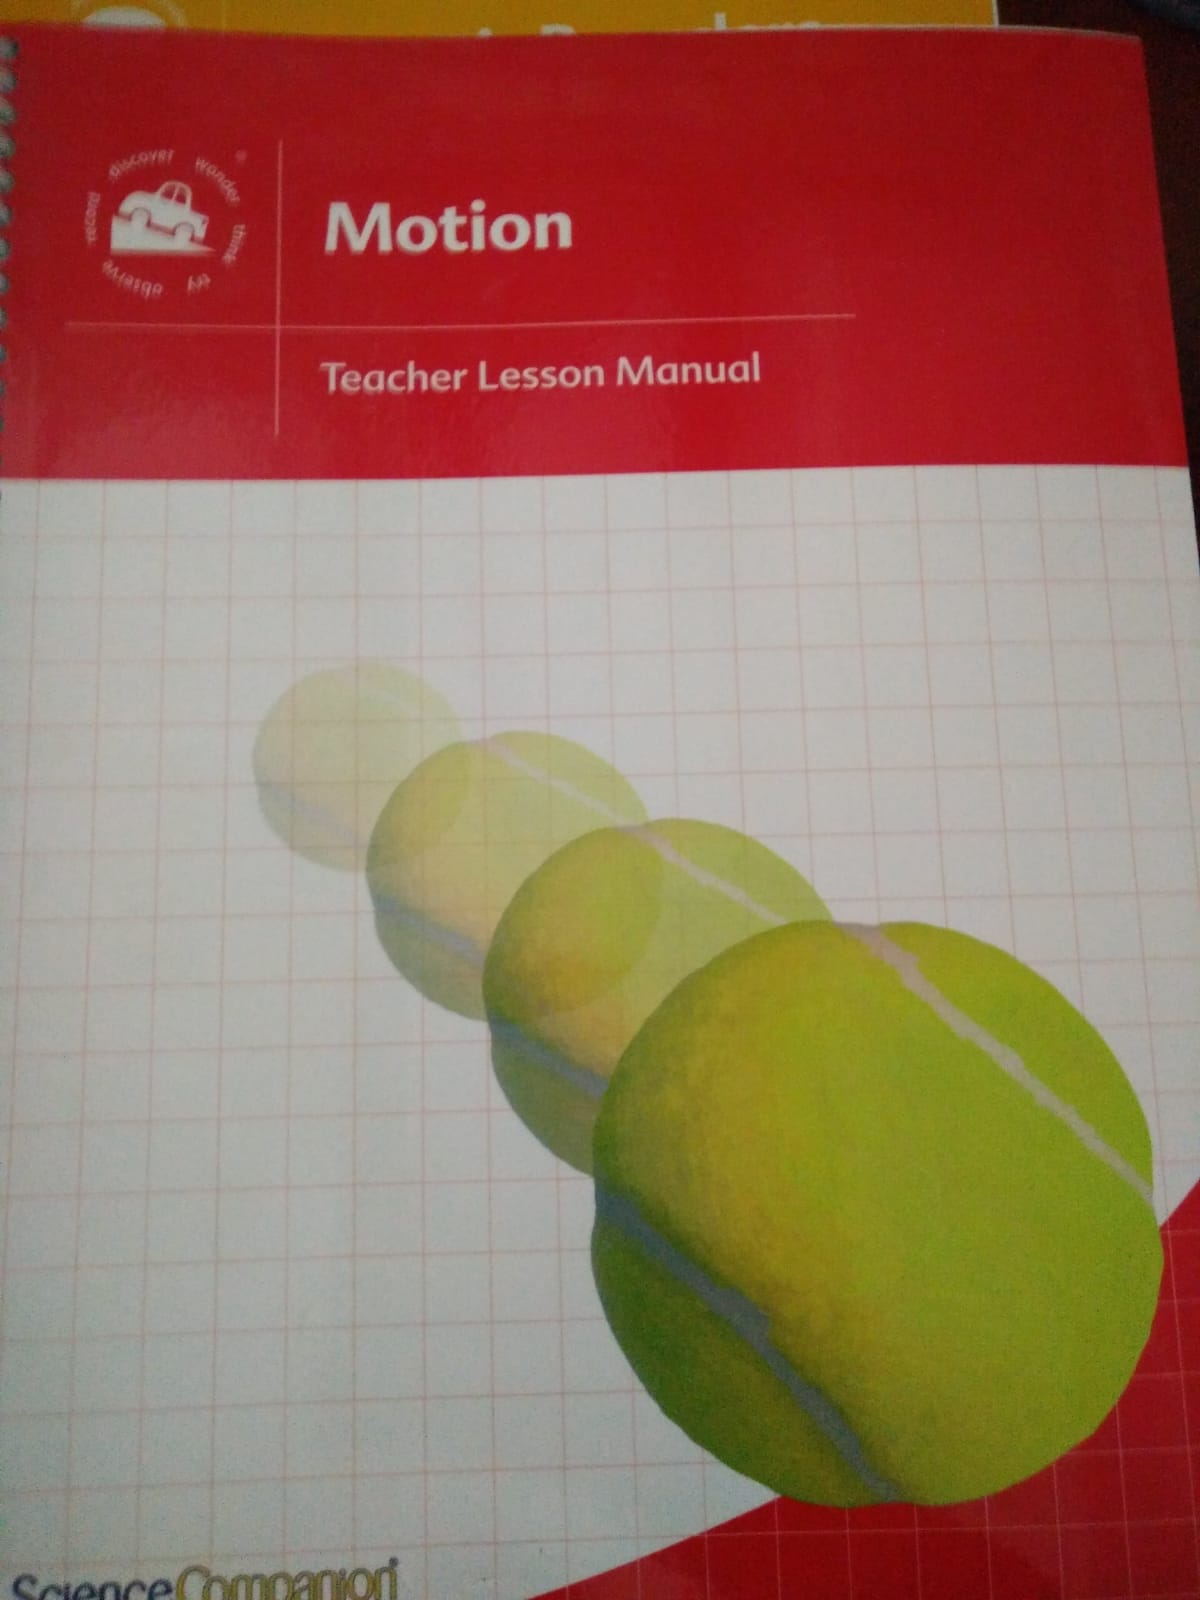 Motion Teacher Lesson Manual